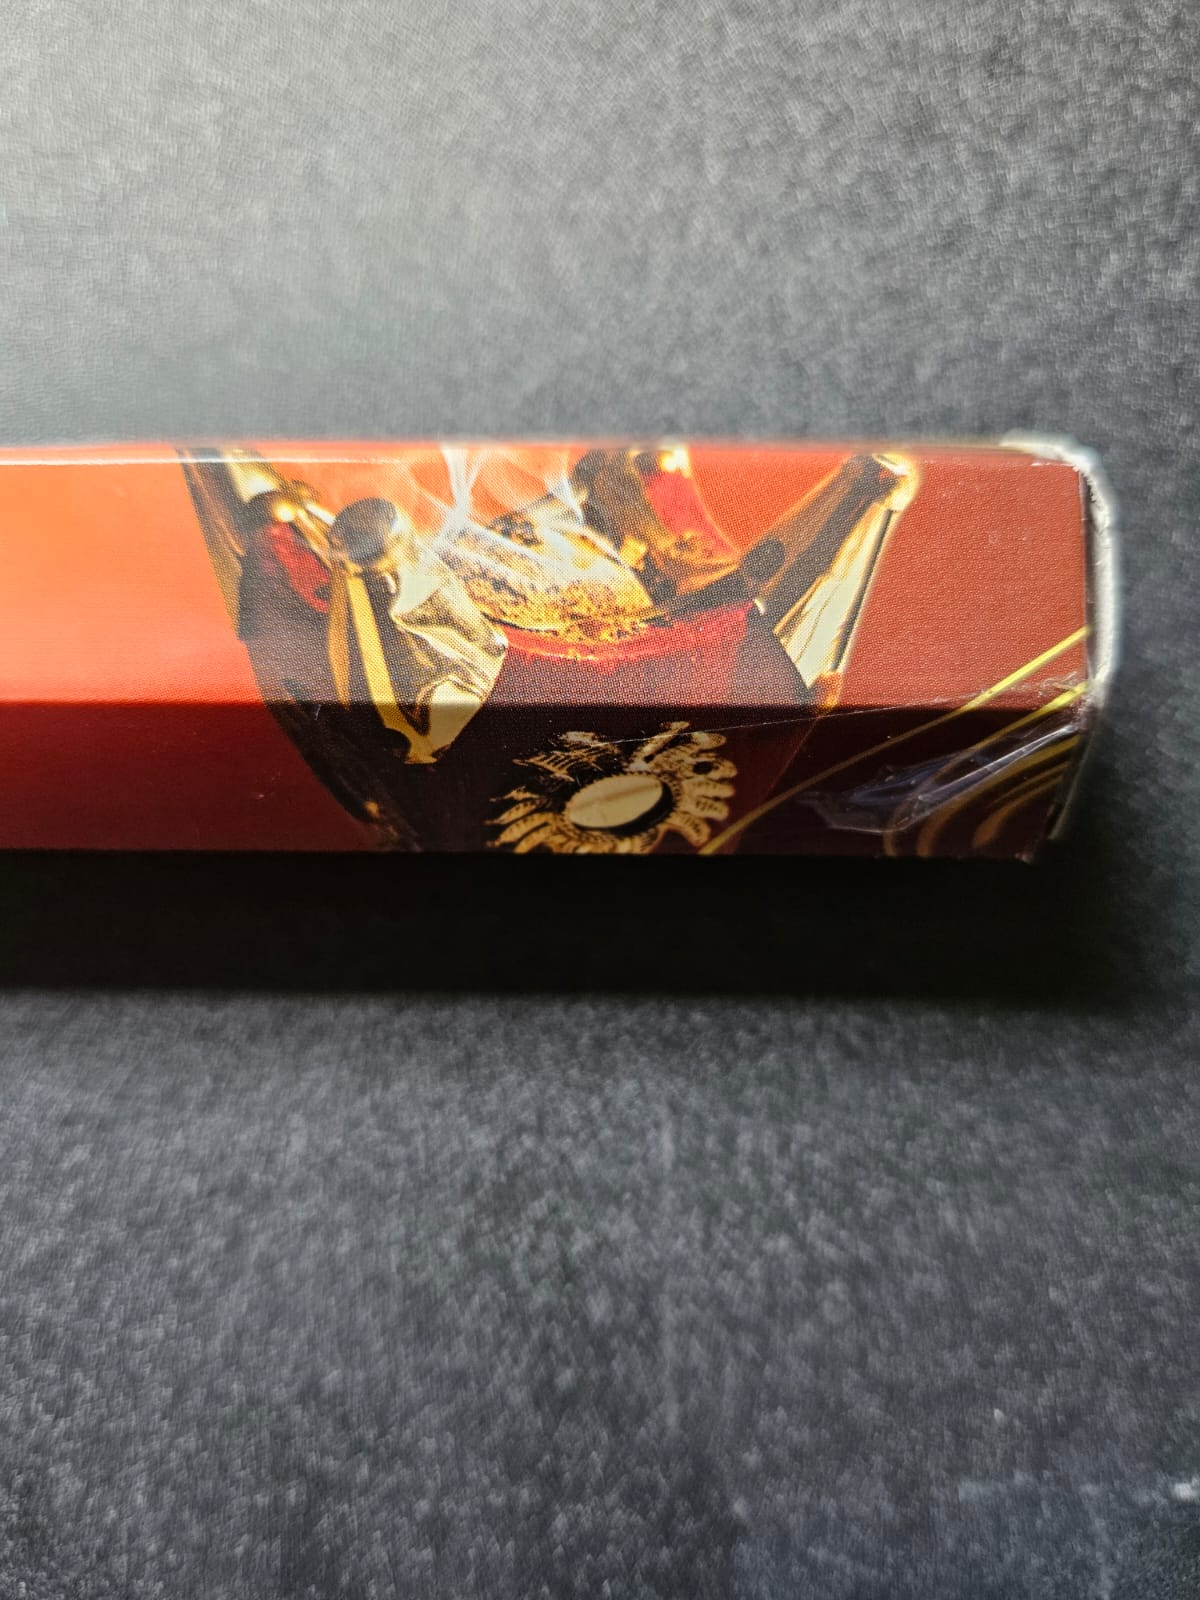 Maharani Bakhoor Incense Sticks (Agarbathi) Premium 20s